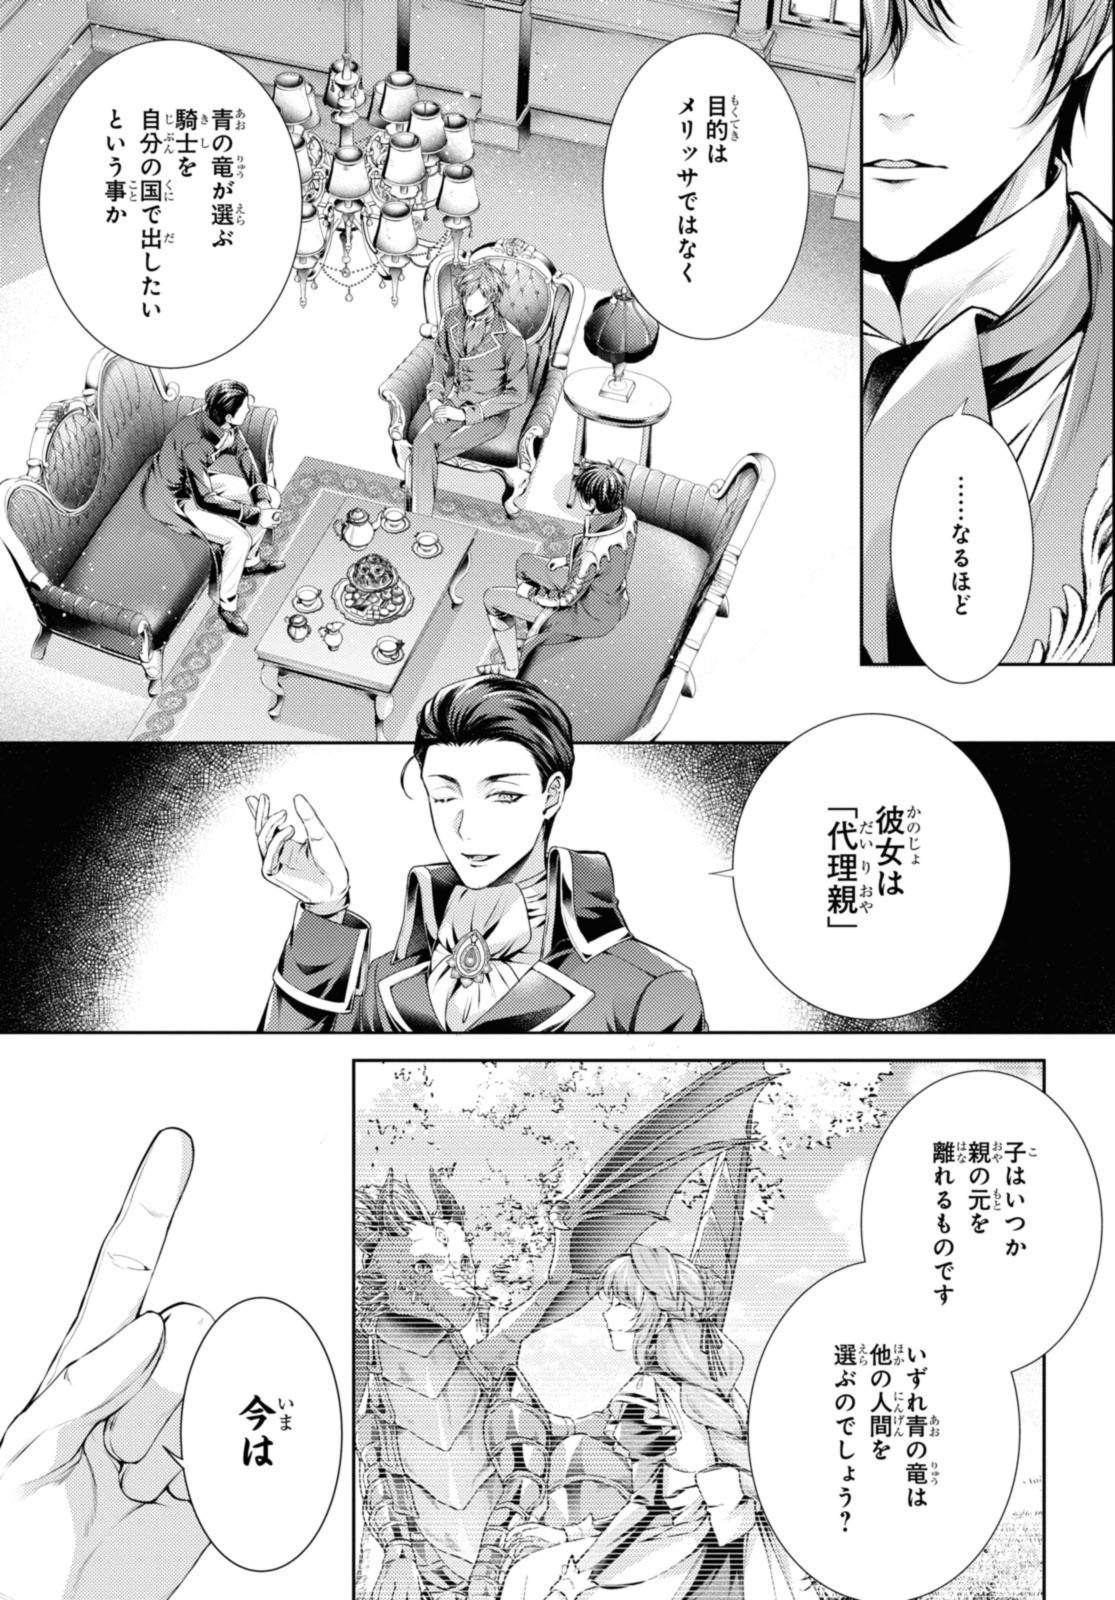 Ryukishi no Okiniiri - Chapter 45.2 - Page 1